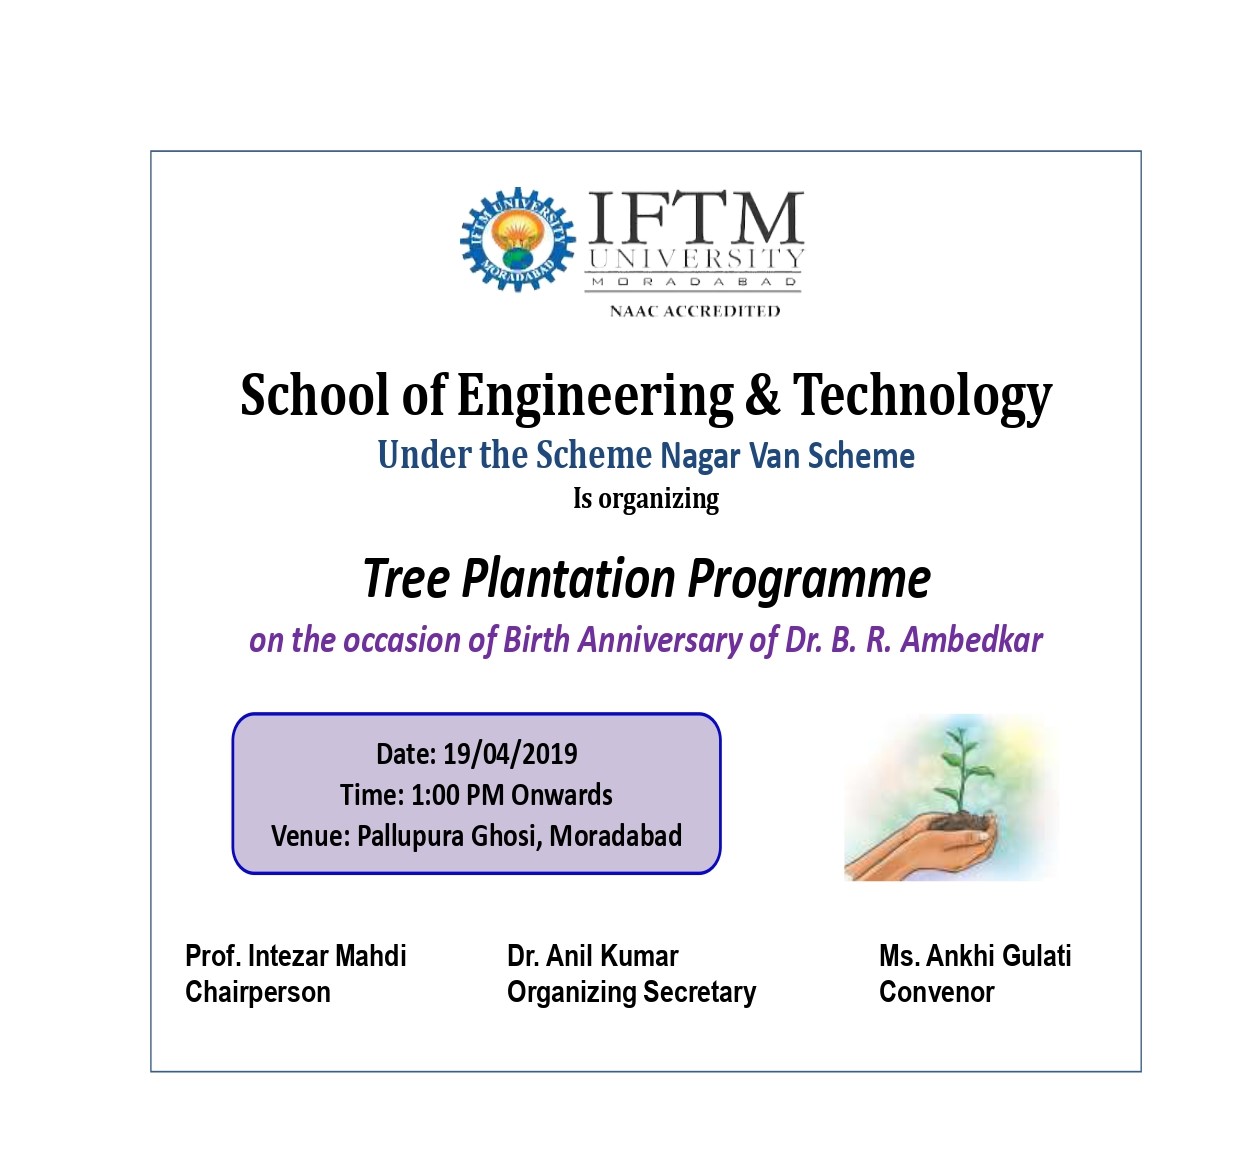 Tree Plantation Programme on the occusion of Birth Anniversary of Dr. B. R. Ambedkar